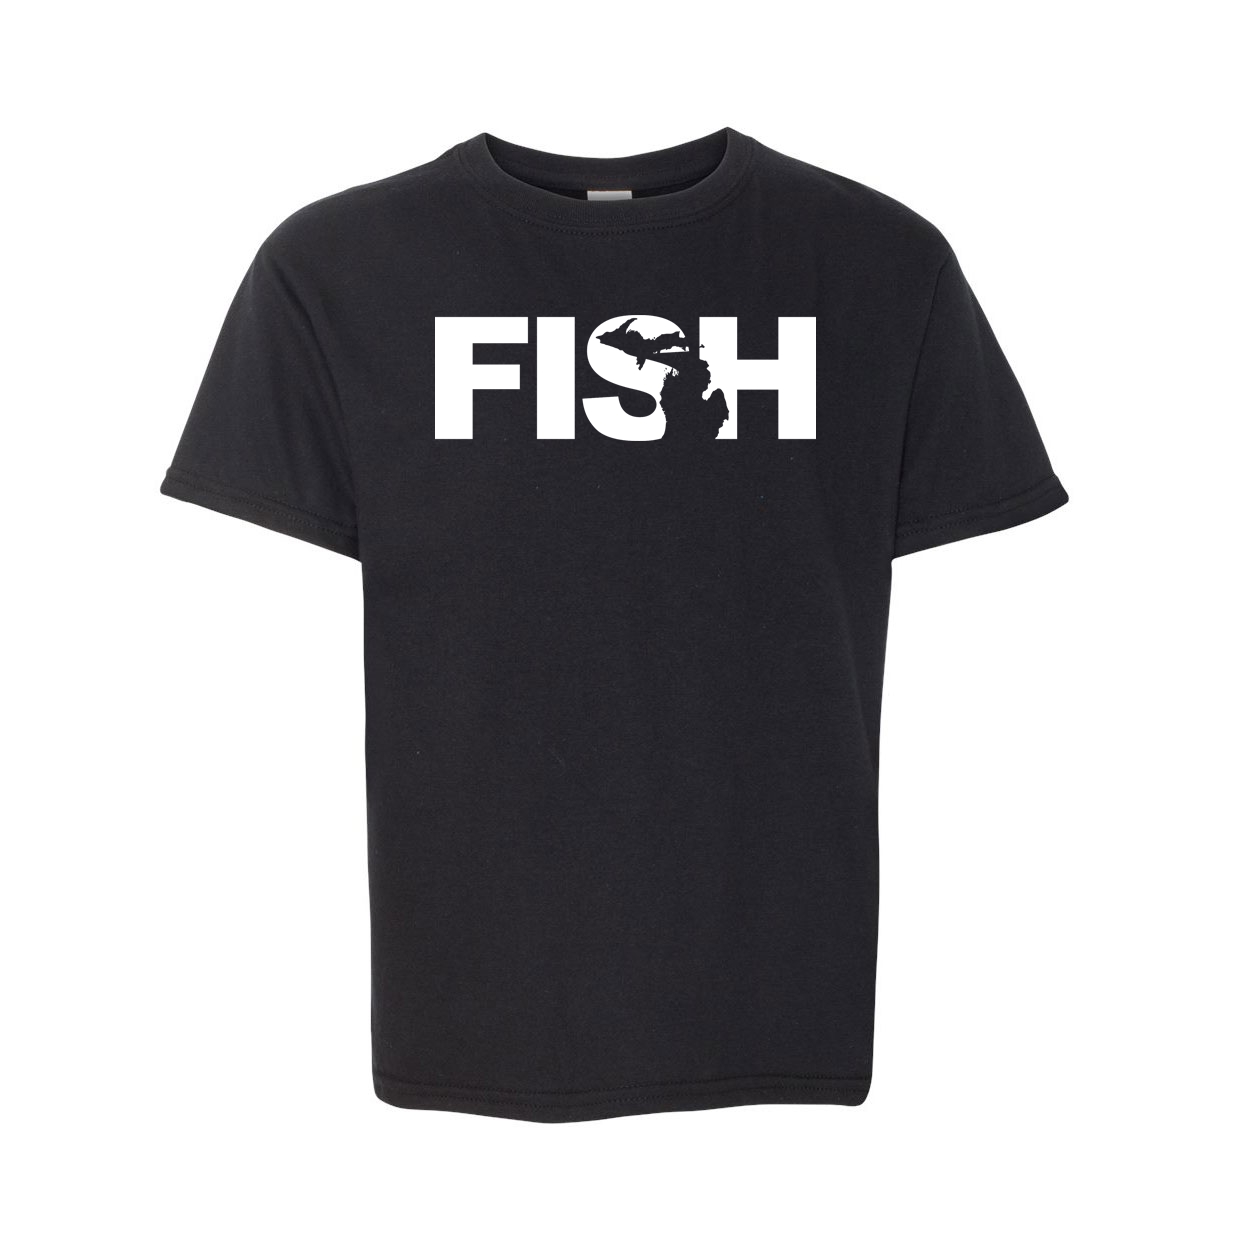 Fish Michigan Classic Youth T-Shirt Black (White Logo)